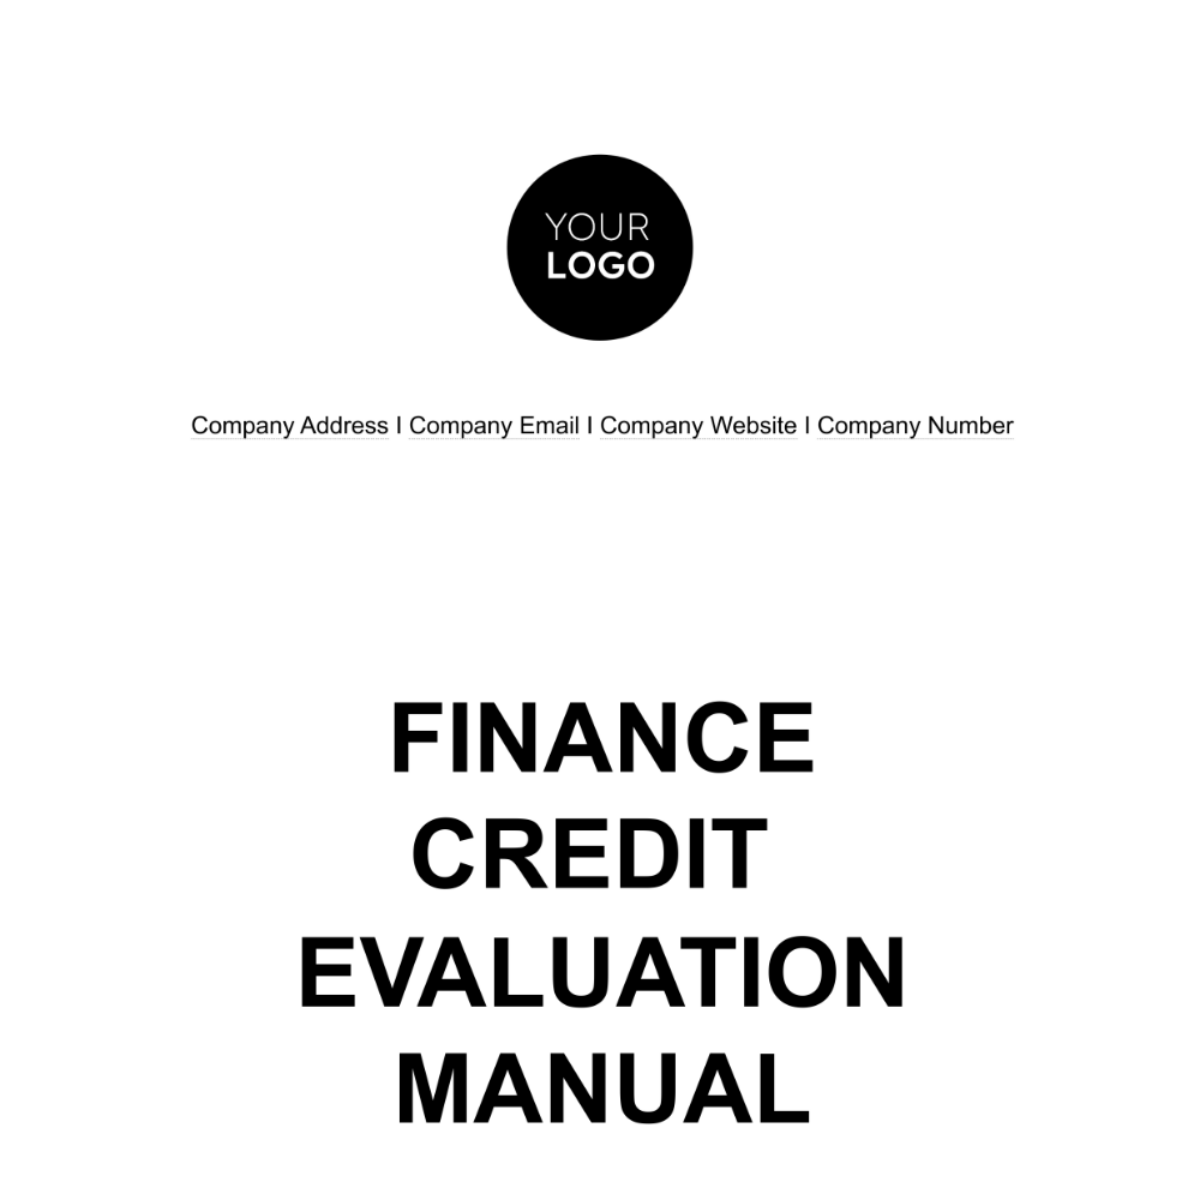 Finance Credit Evaluation Manual Template